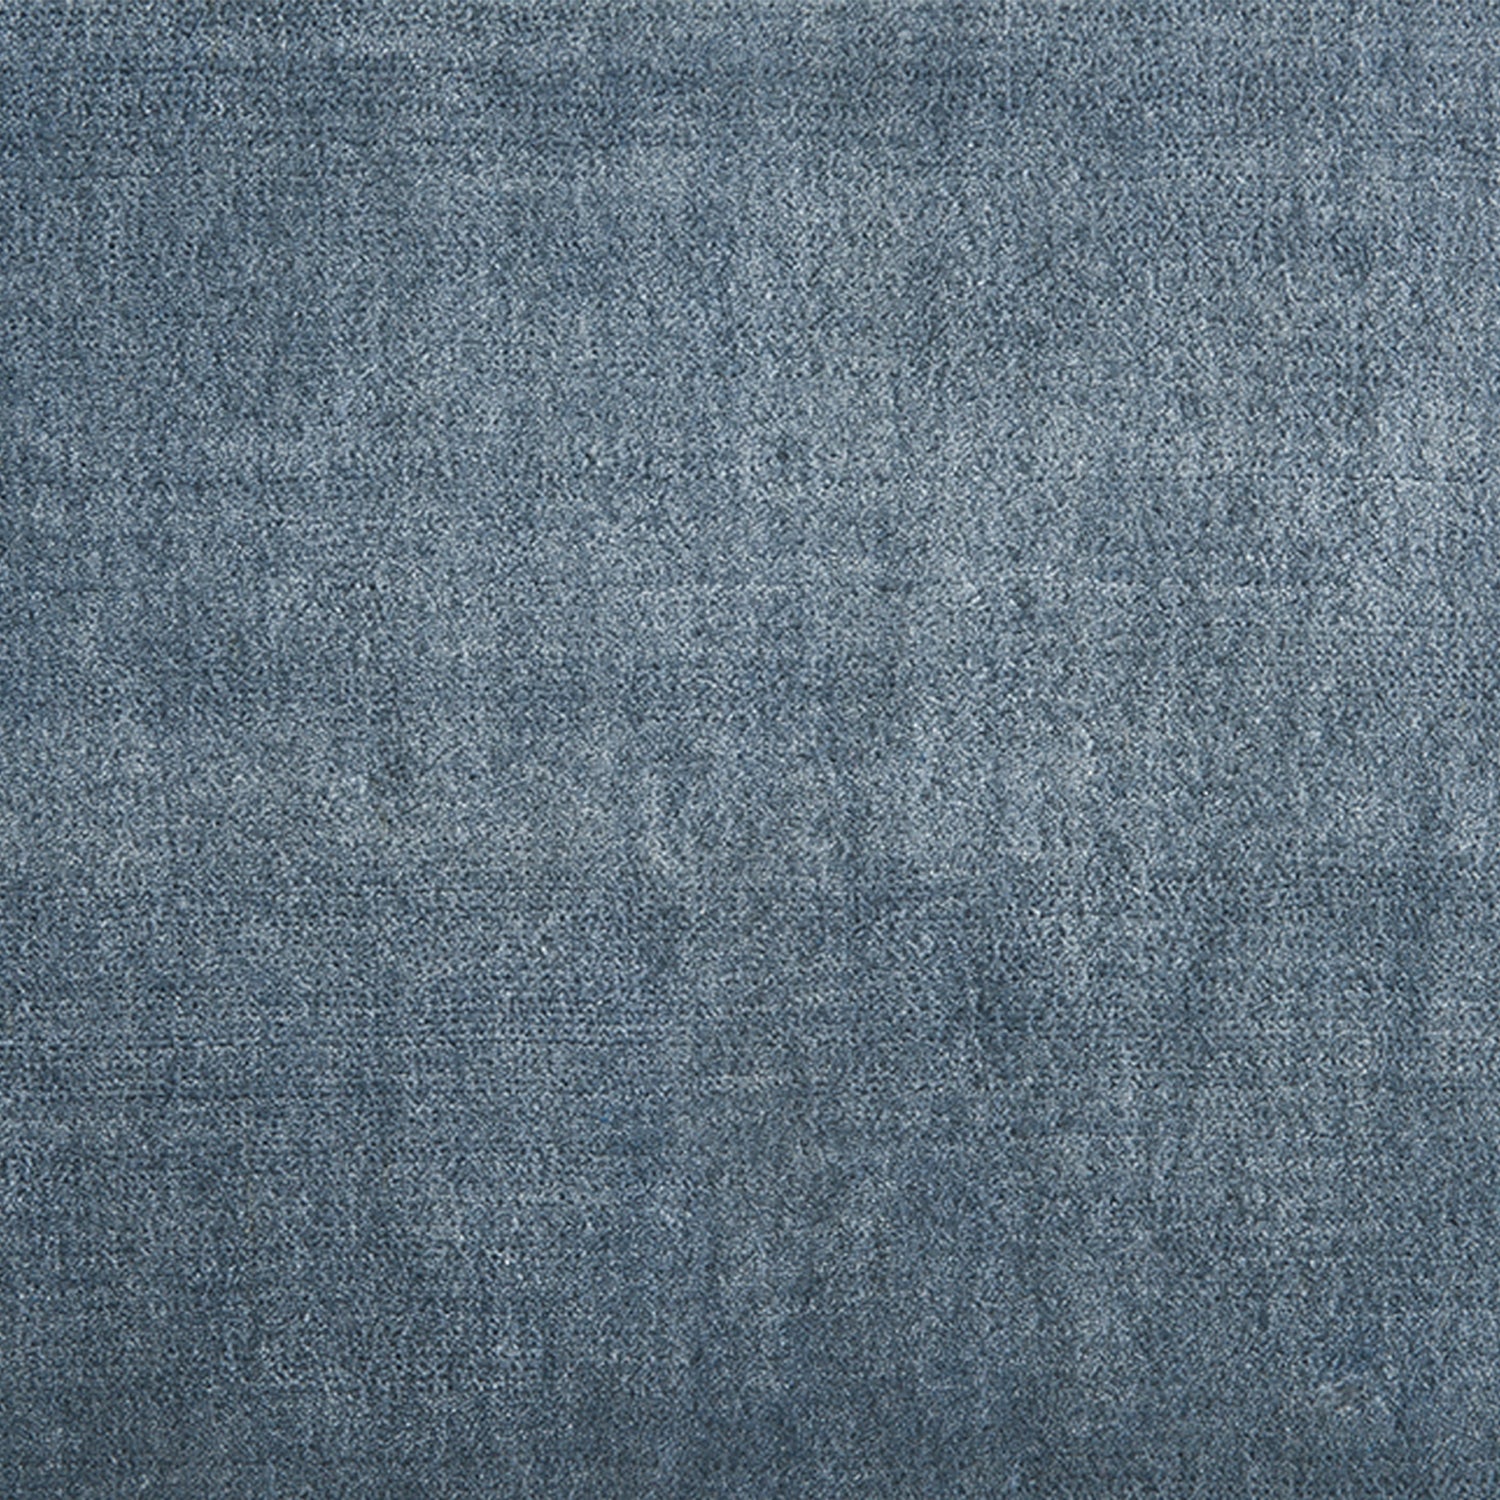 Nylon broadloom carpet swatch in a cut pile texture in navy.